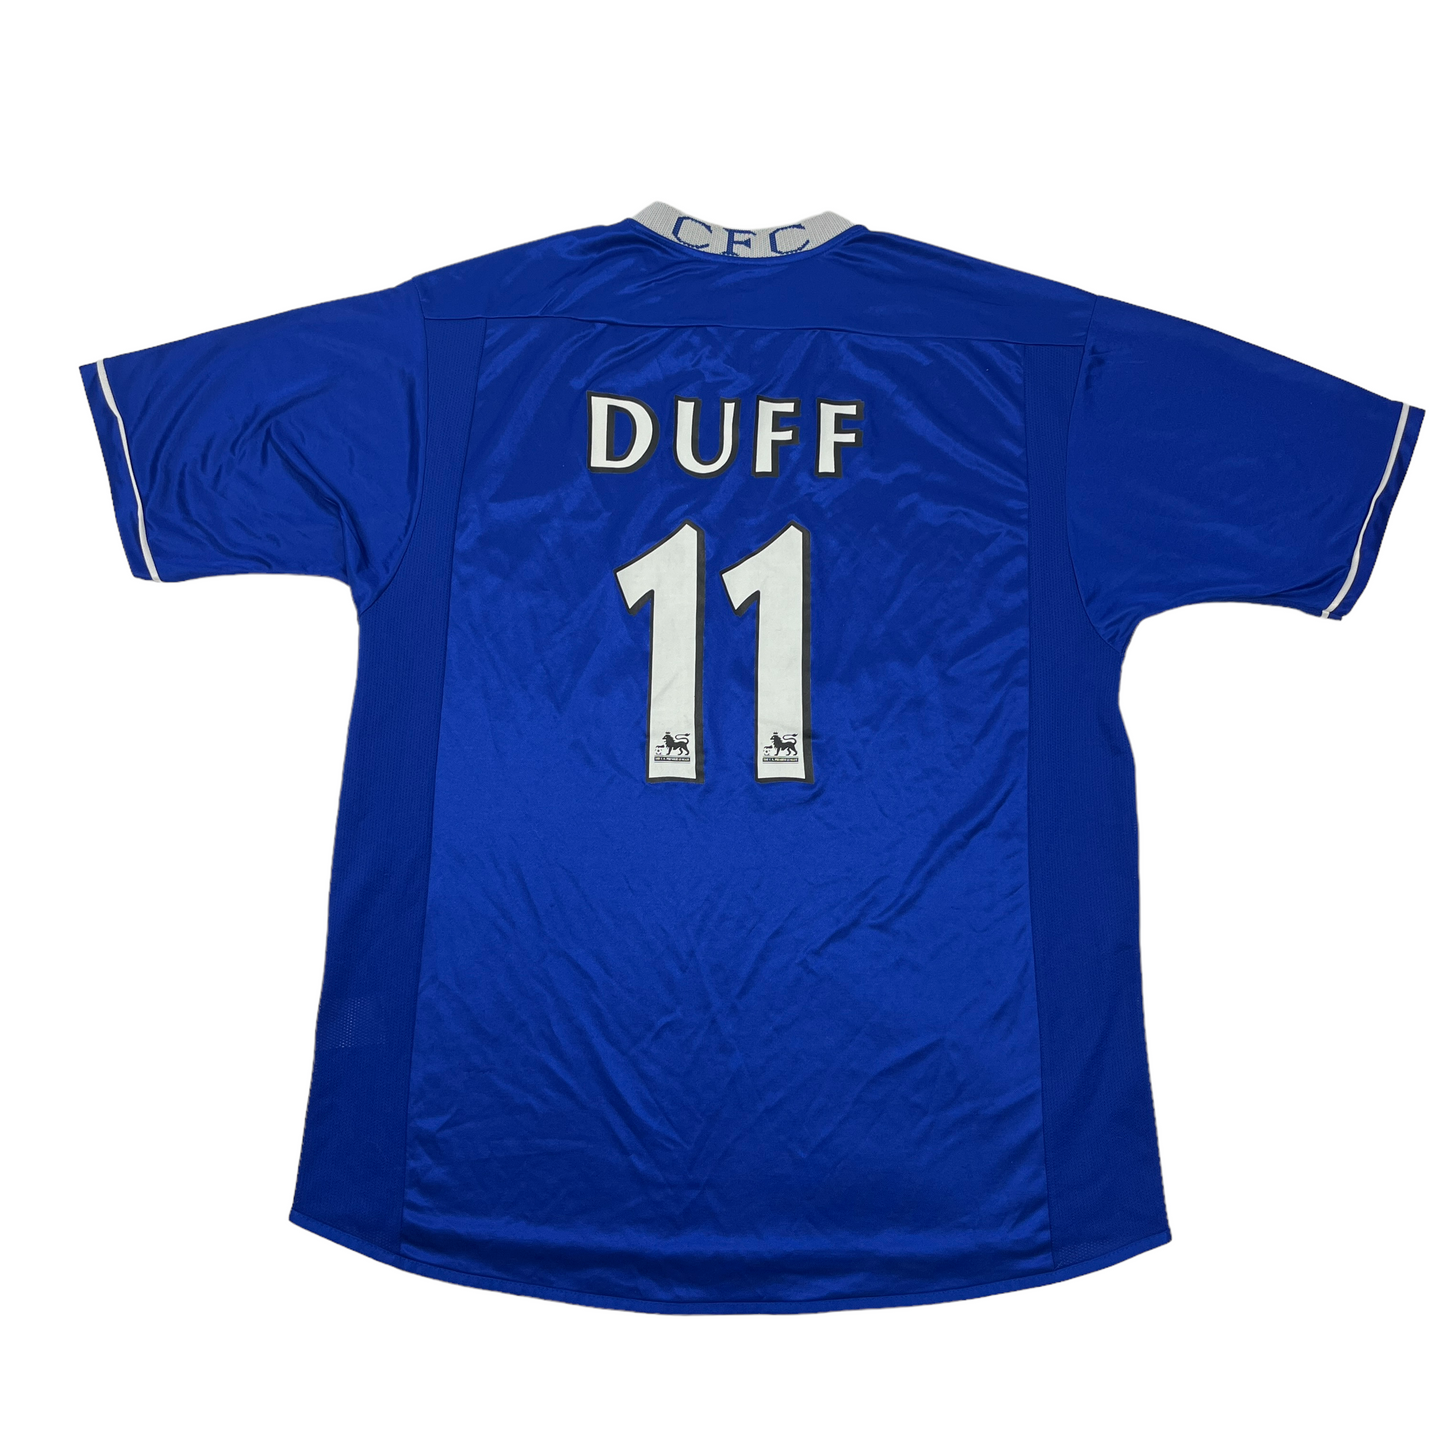 01572 Umbro FC Chelsea Damian Duff 2005 Home Jersey